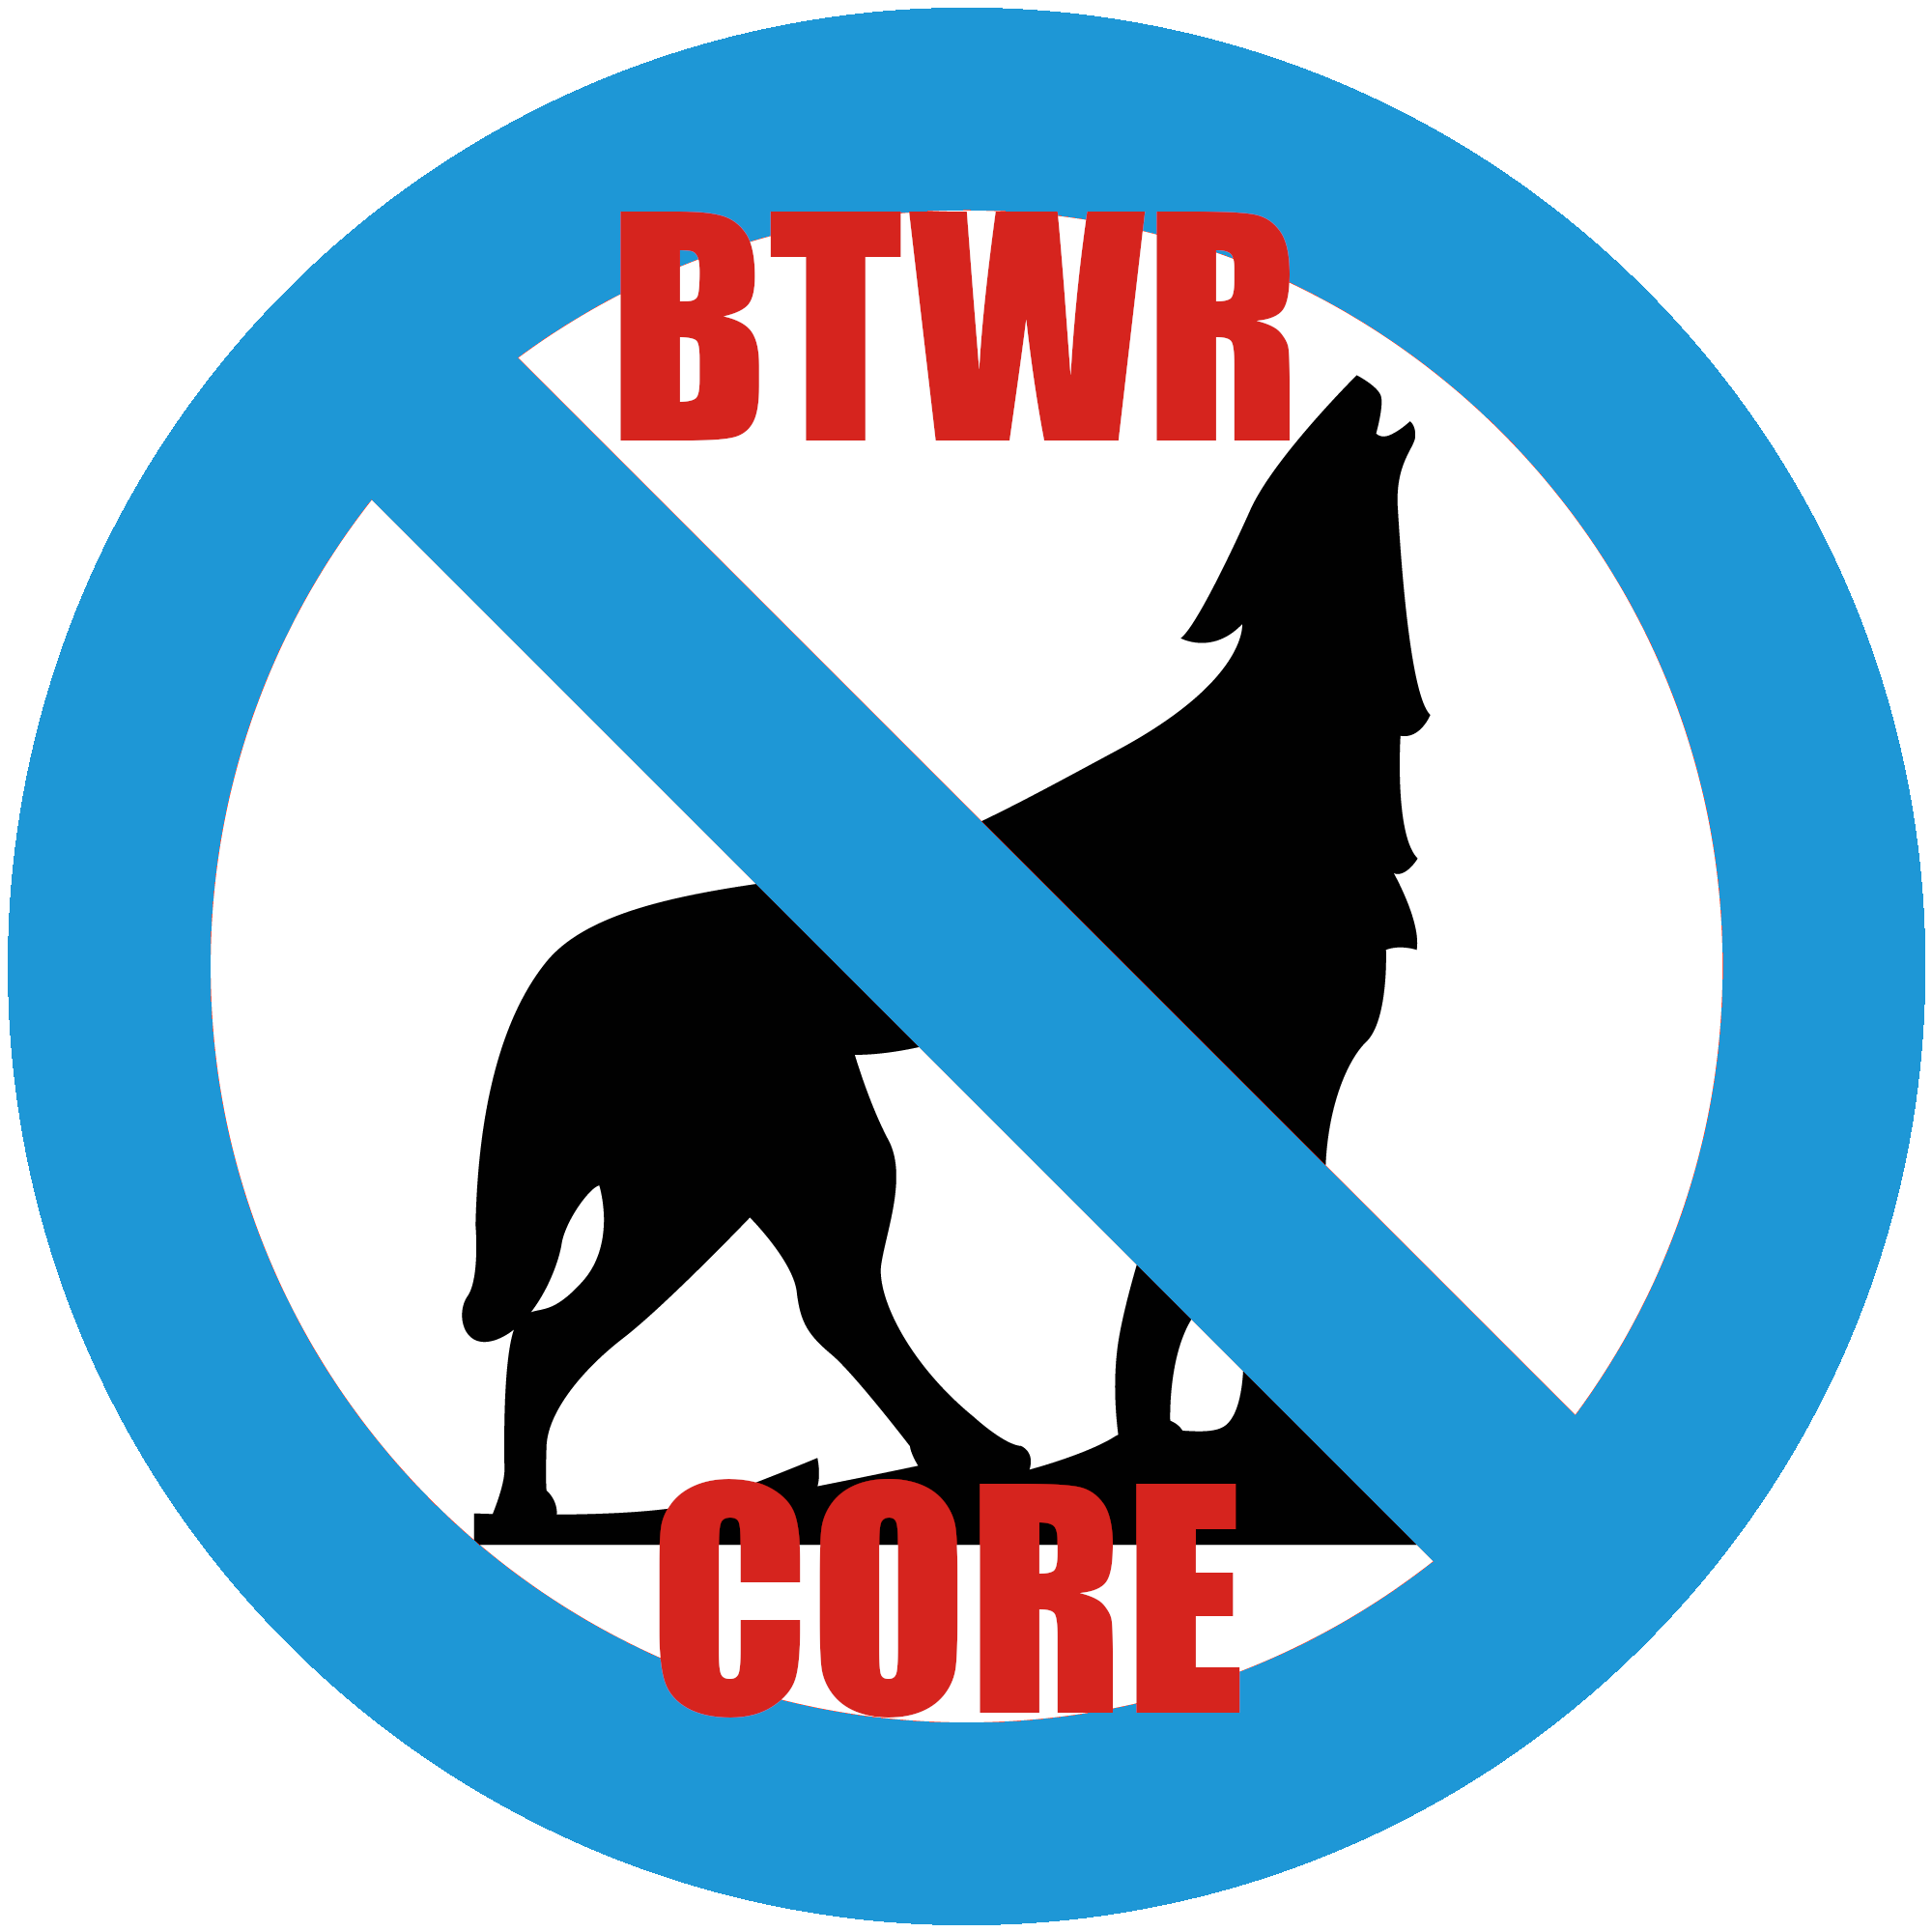 BTWR:Core